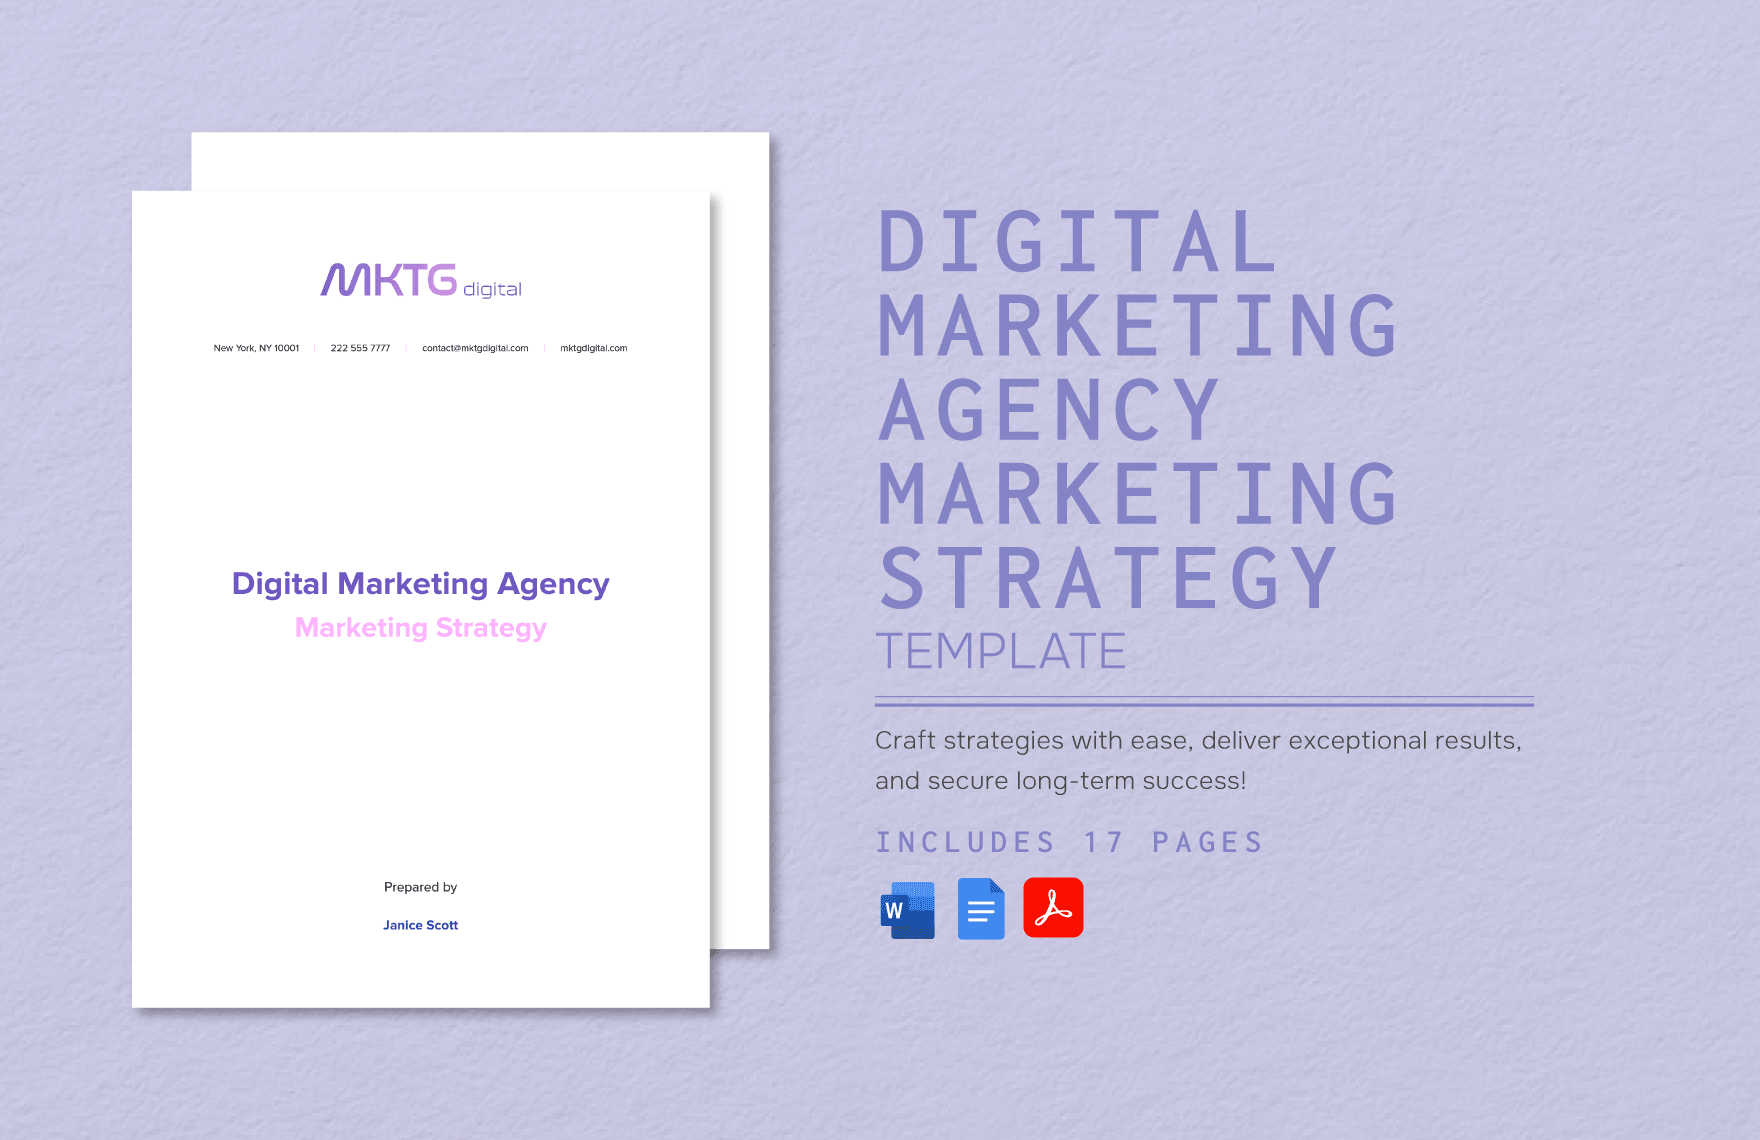 Digital Marketing Agency Marketing Strategy Template